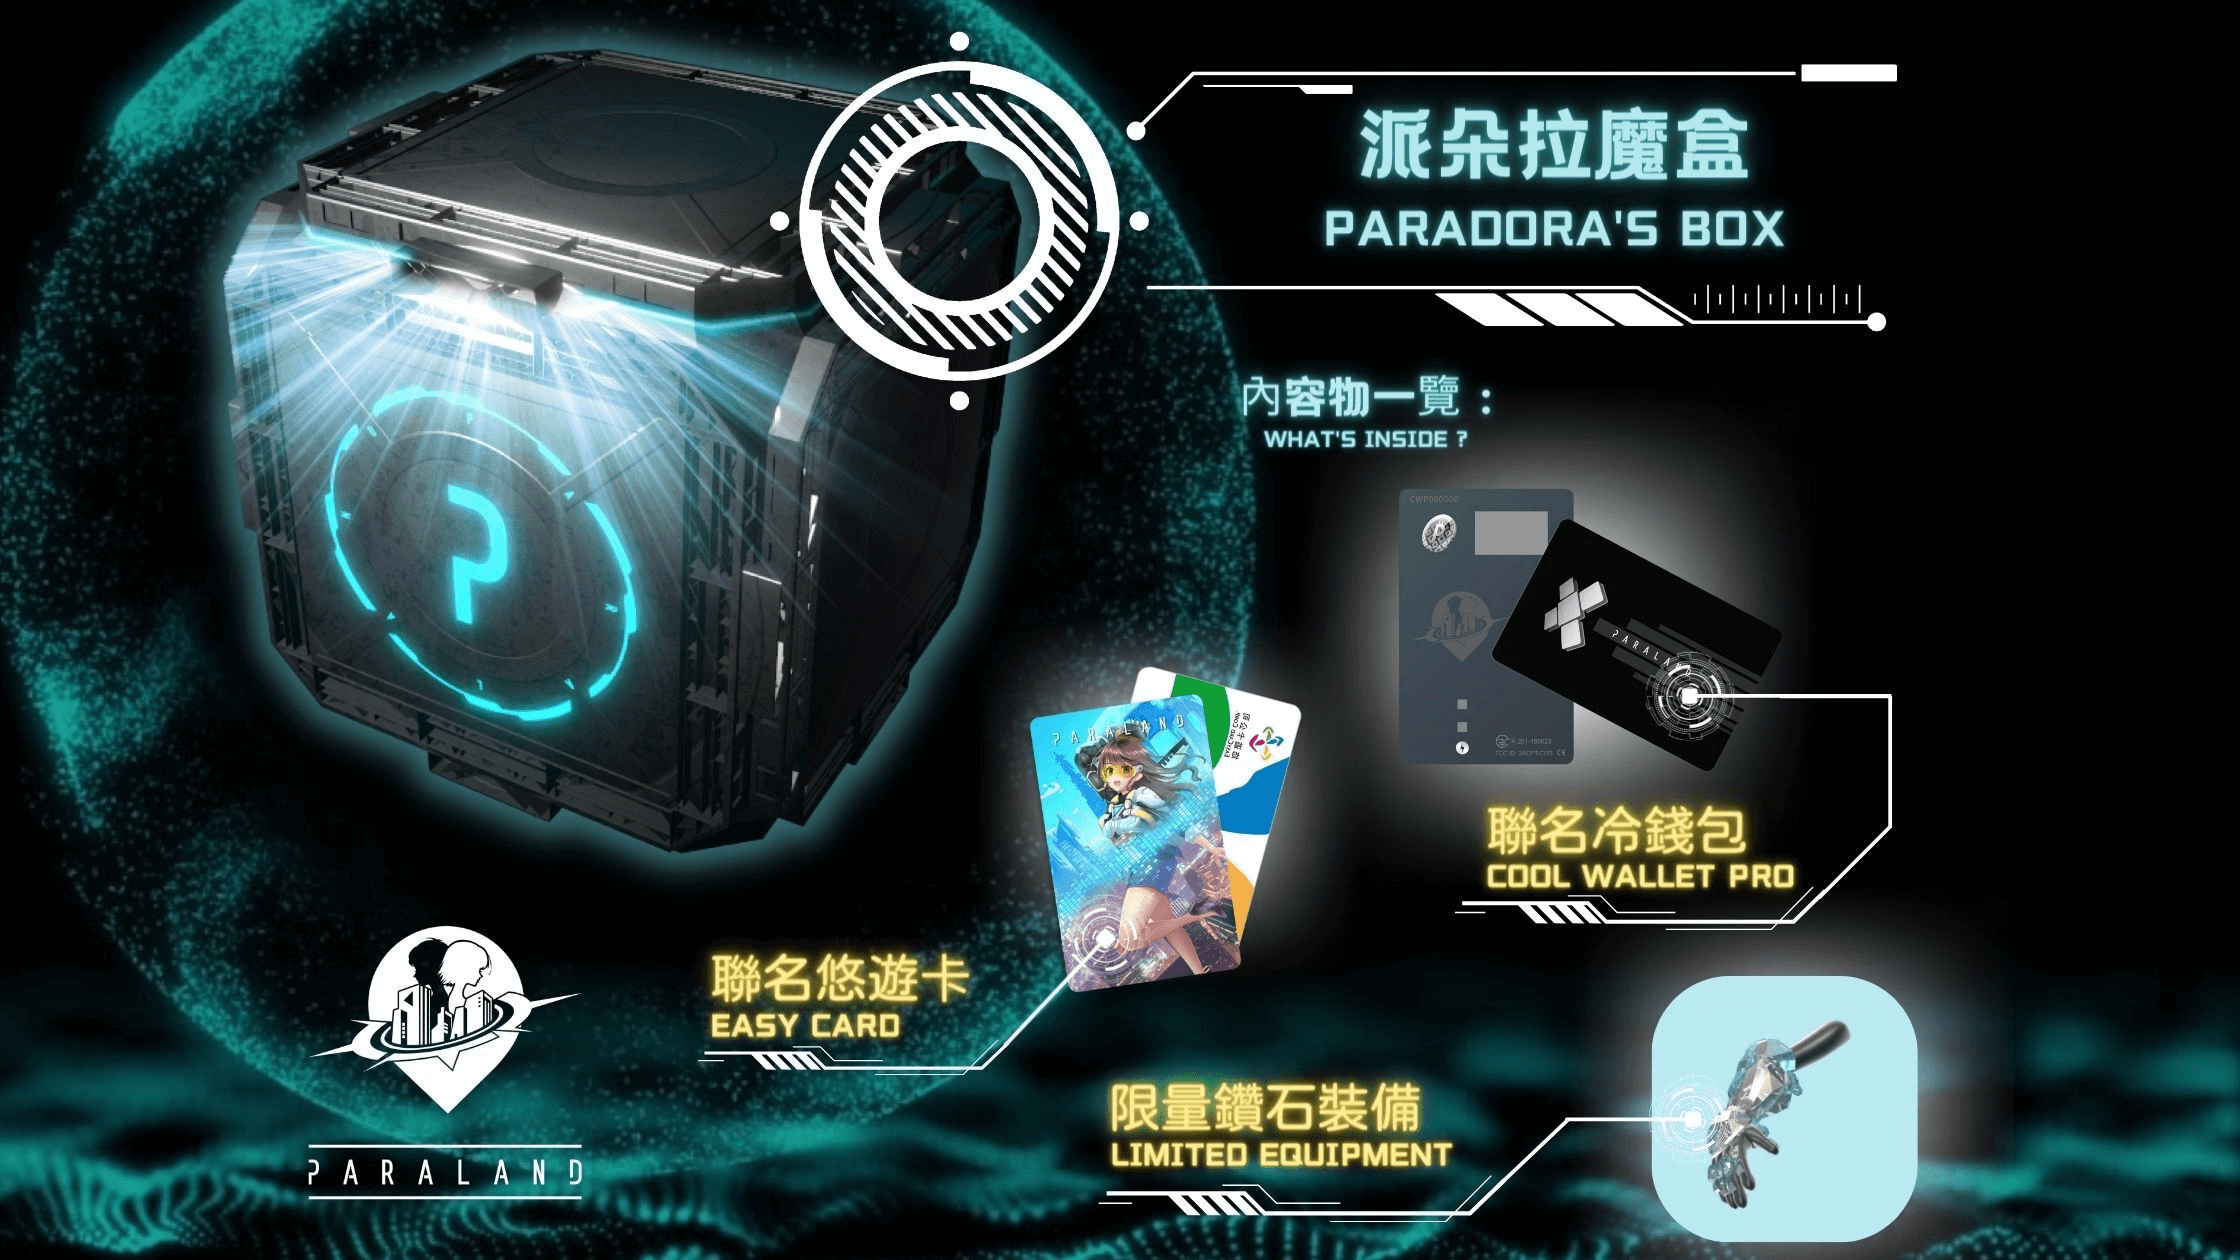 PARADORA’s Box Season 1 has commenced!